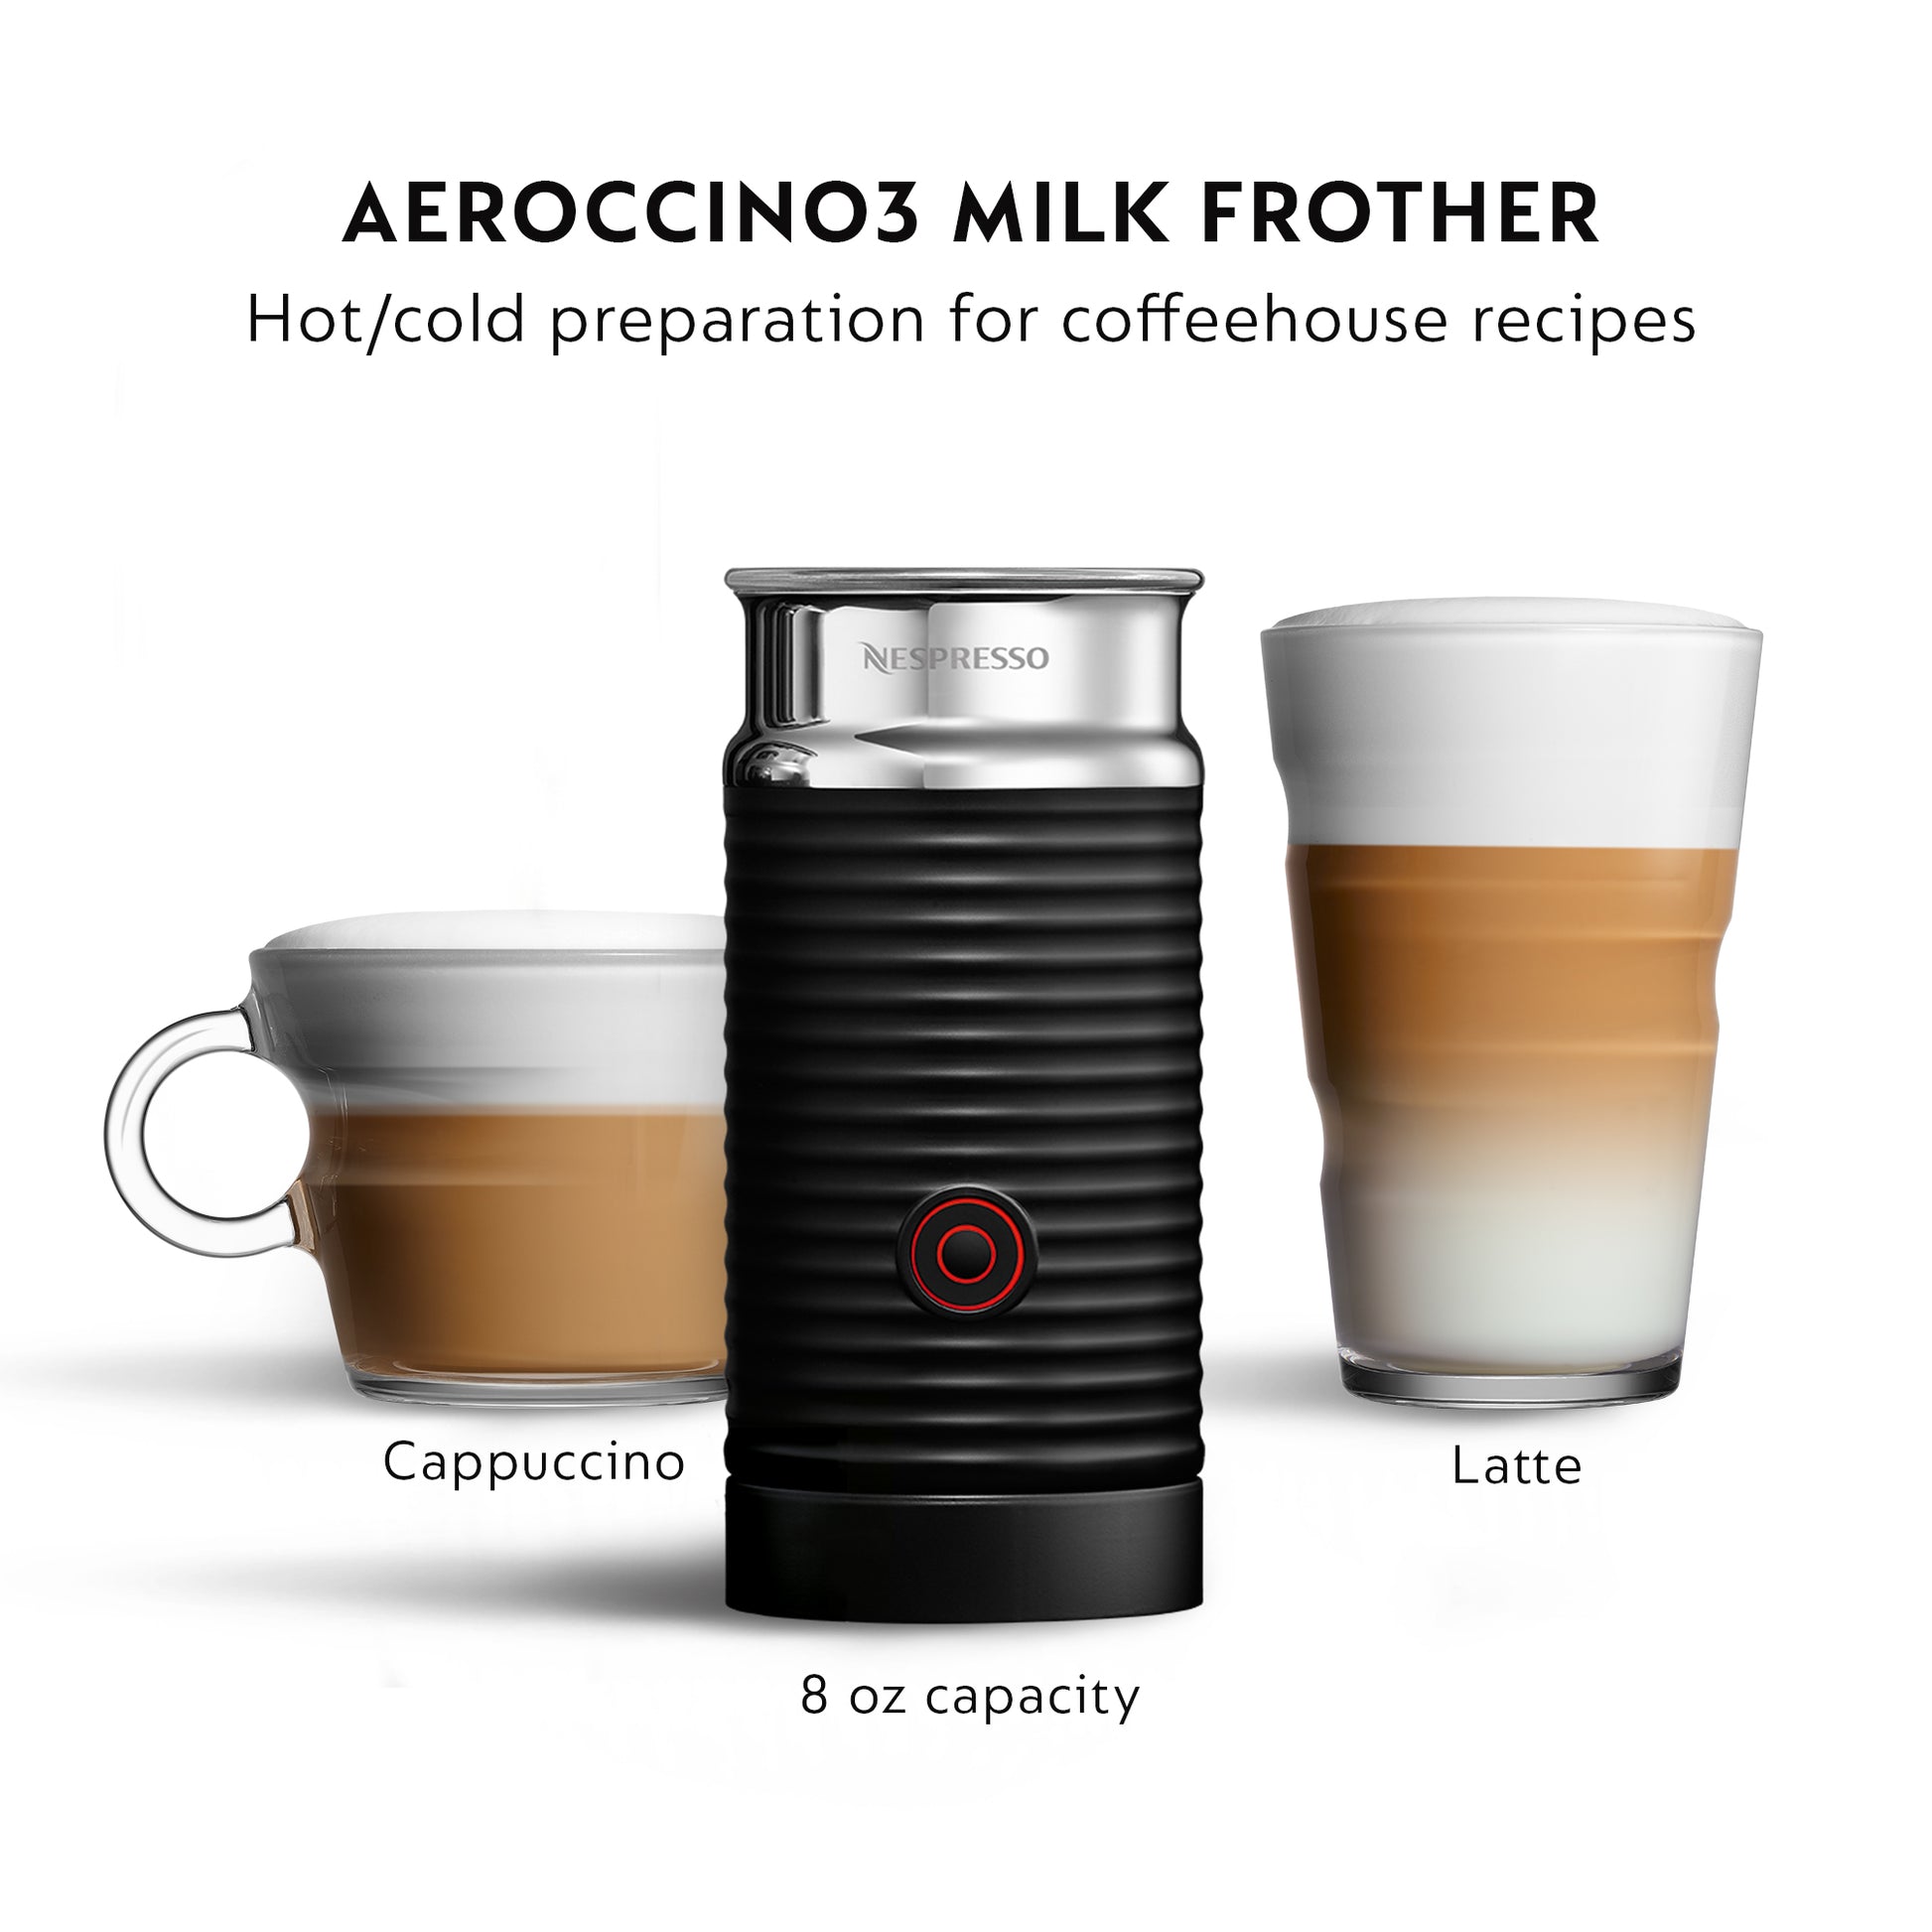 10 Nespresso Aeroccino 3 Tips and Tricks